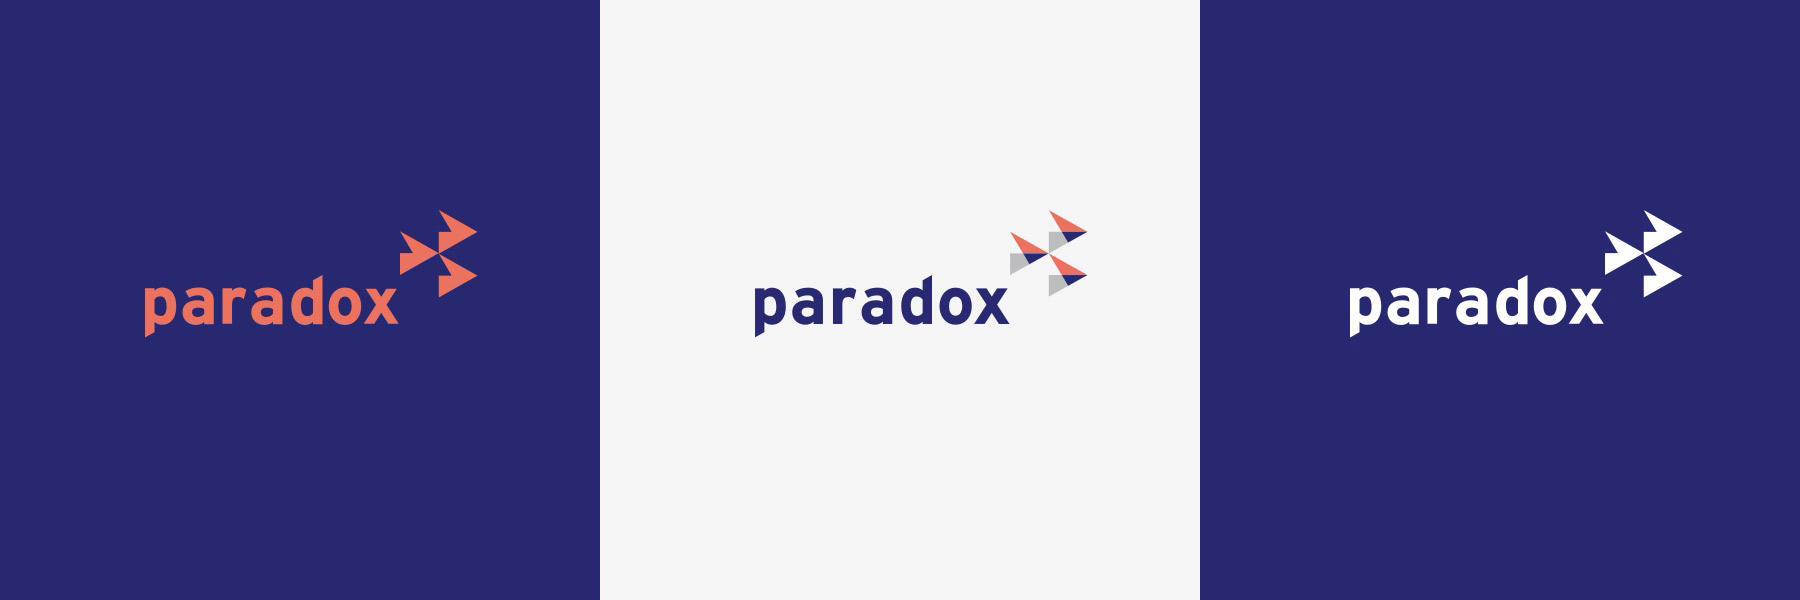 paradox retail logo in several colors